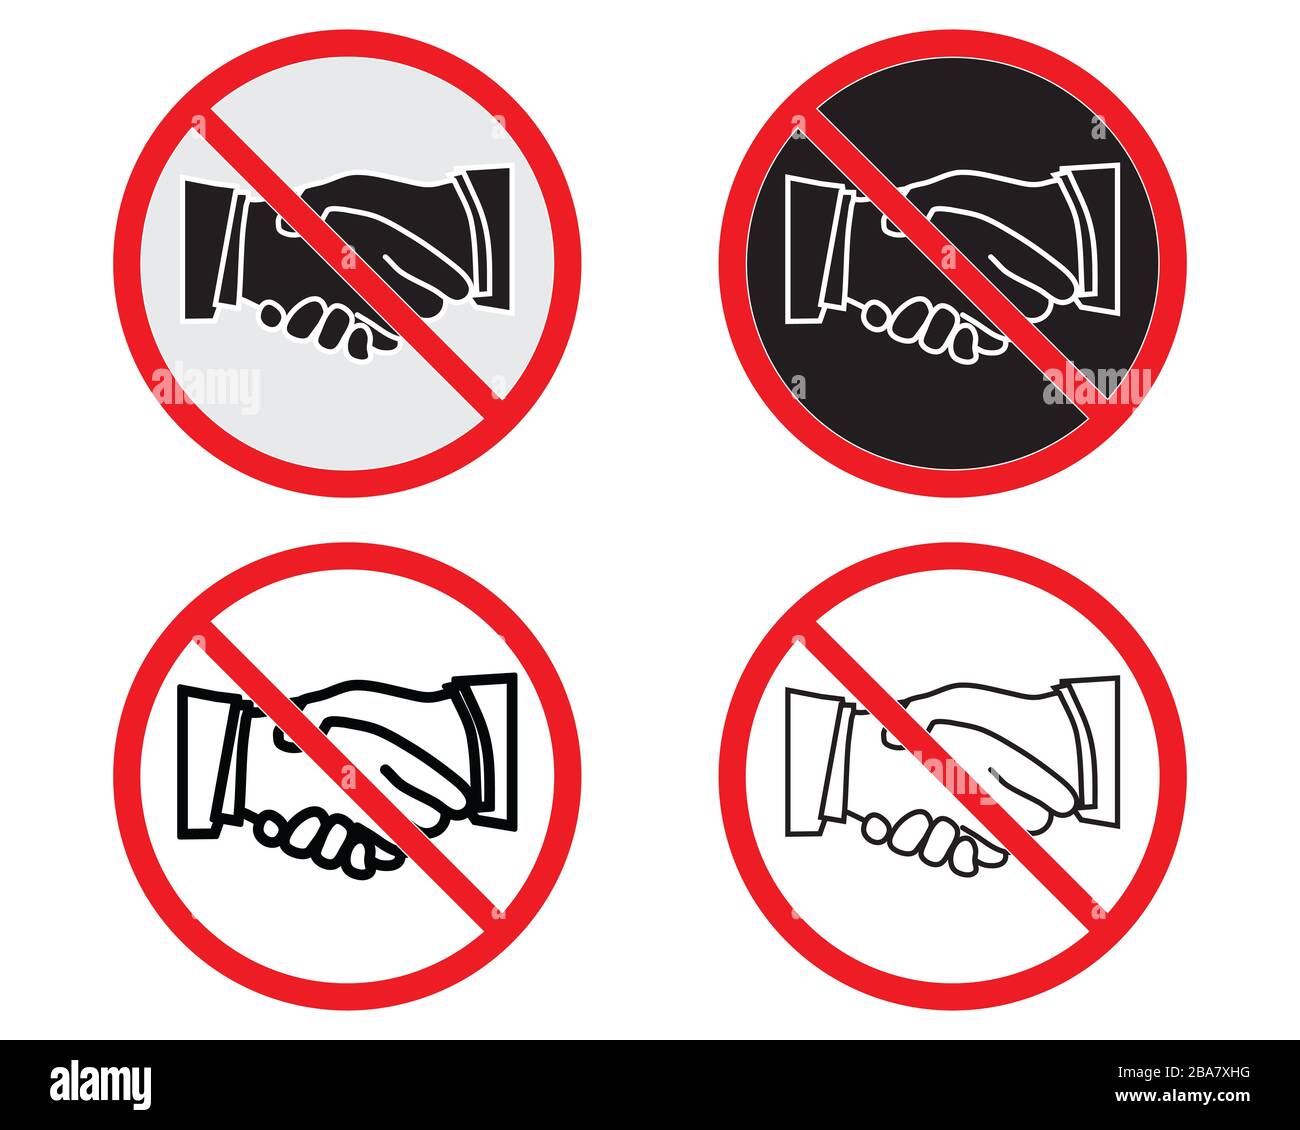 No handshake vector. Not allow handshake sign. The red circle prohibiting sing Stock Photo